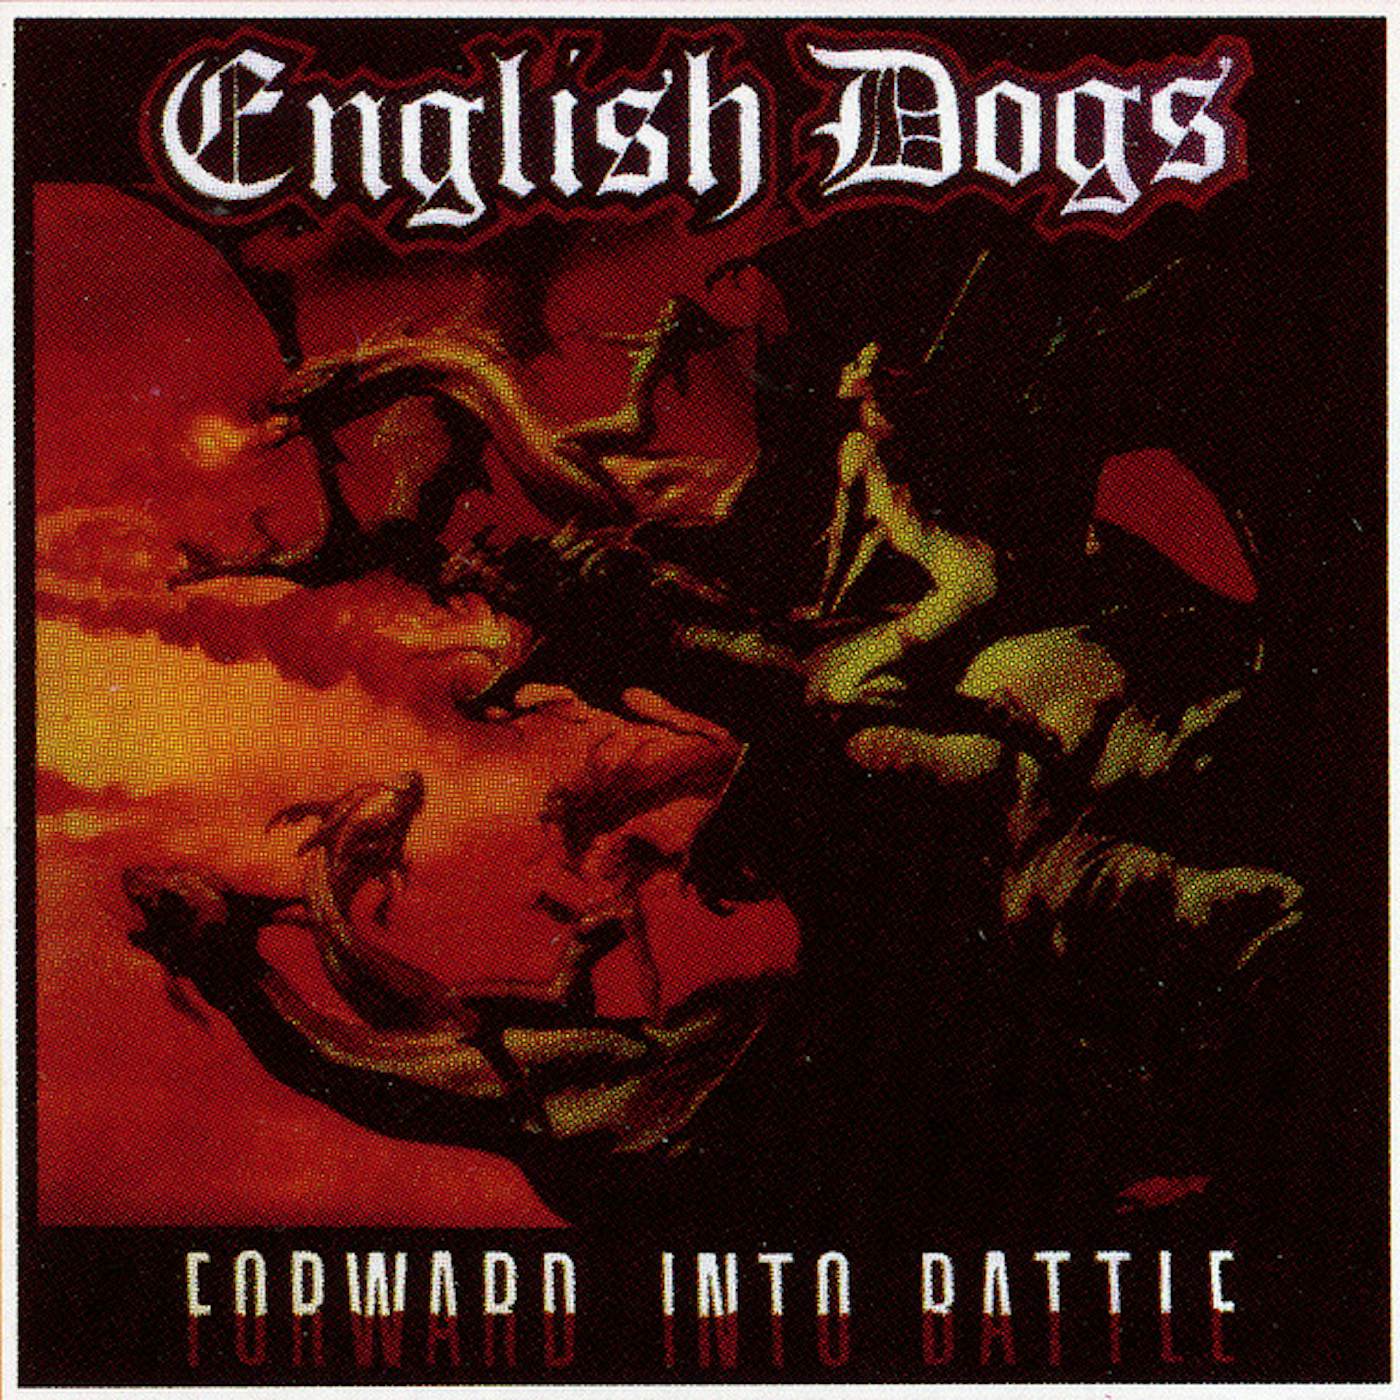 English Dogs FORWARD INTO BATTLE CD